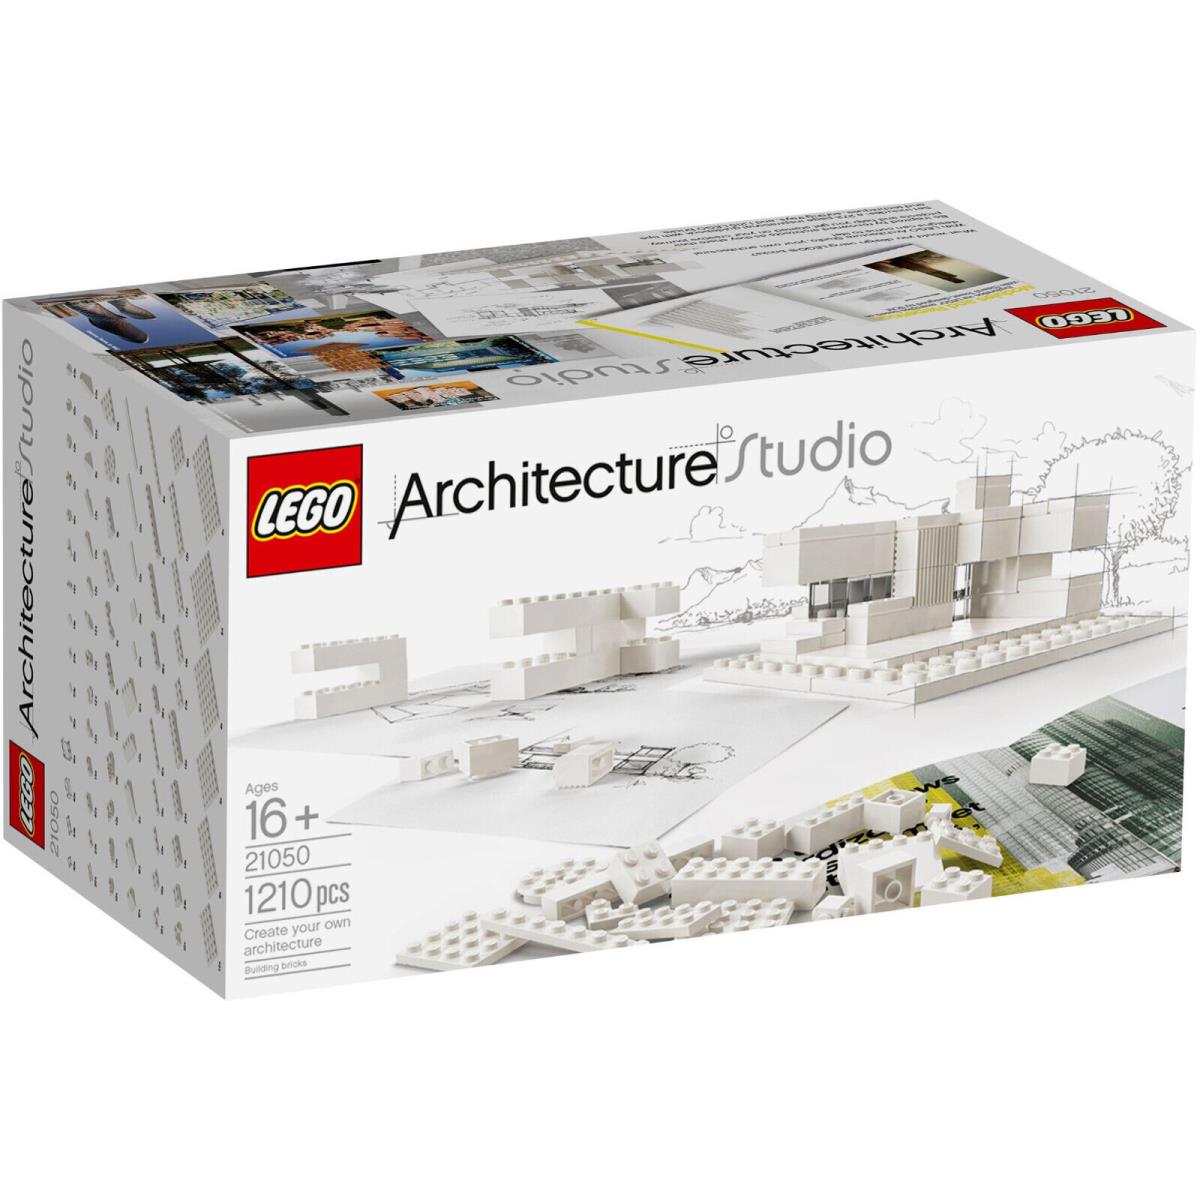 Lego 21050 Architecture Studio